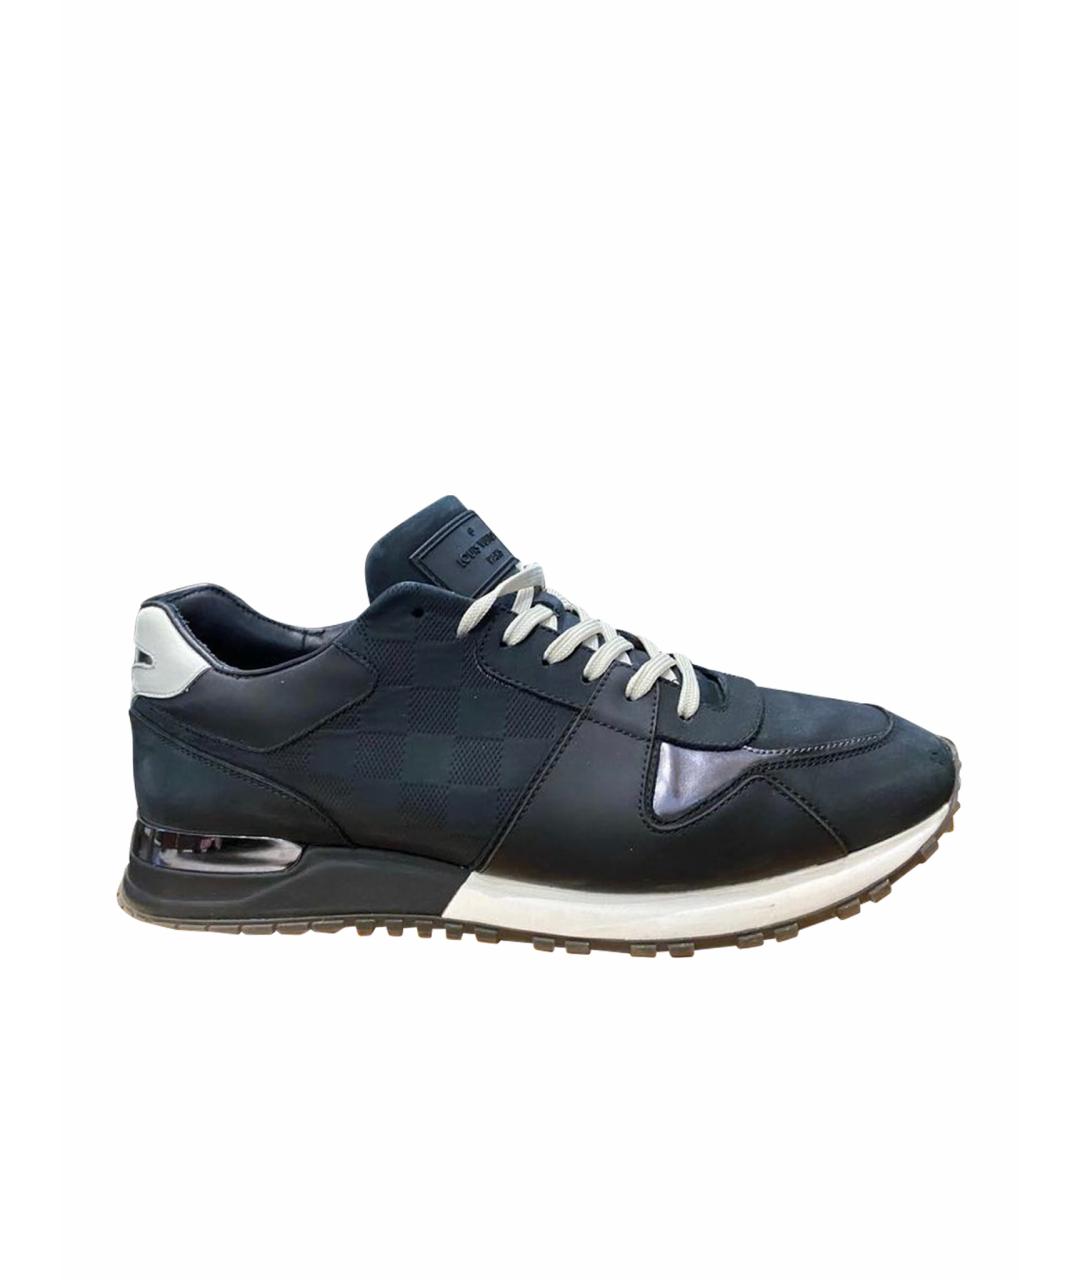 LOUIS VUITTON PRE-OWNED Темно-синие нубуковые низкие кроссовки / кеды, фото 1